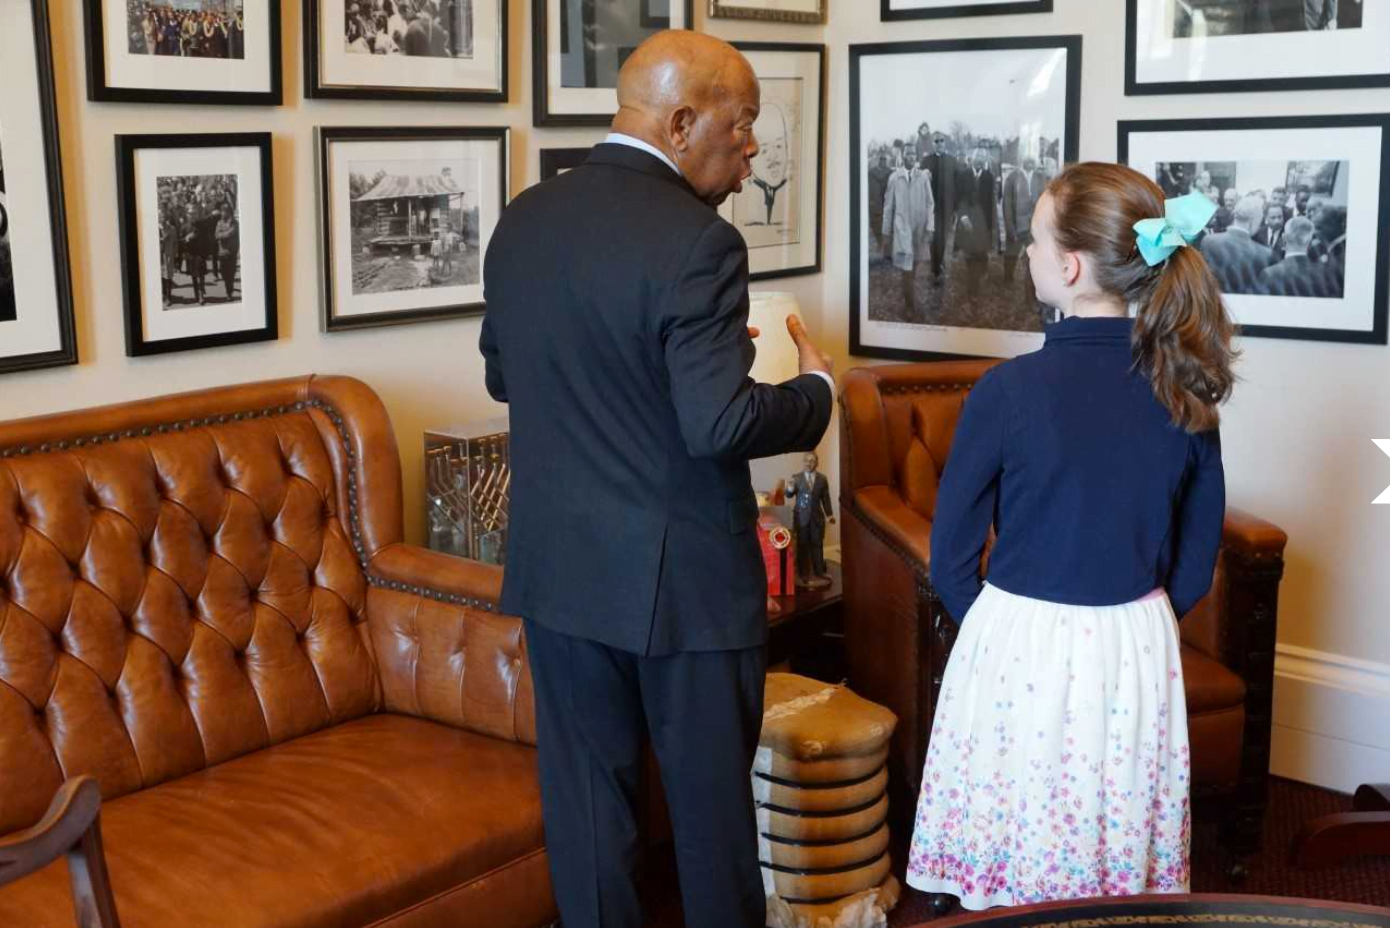 Riona McKersie with Congressman John Lewis in Washington DC on April 13, 2018 Contributed photo